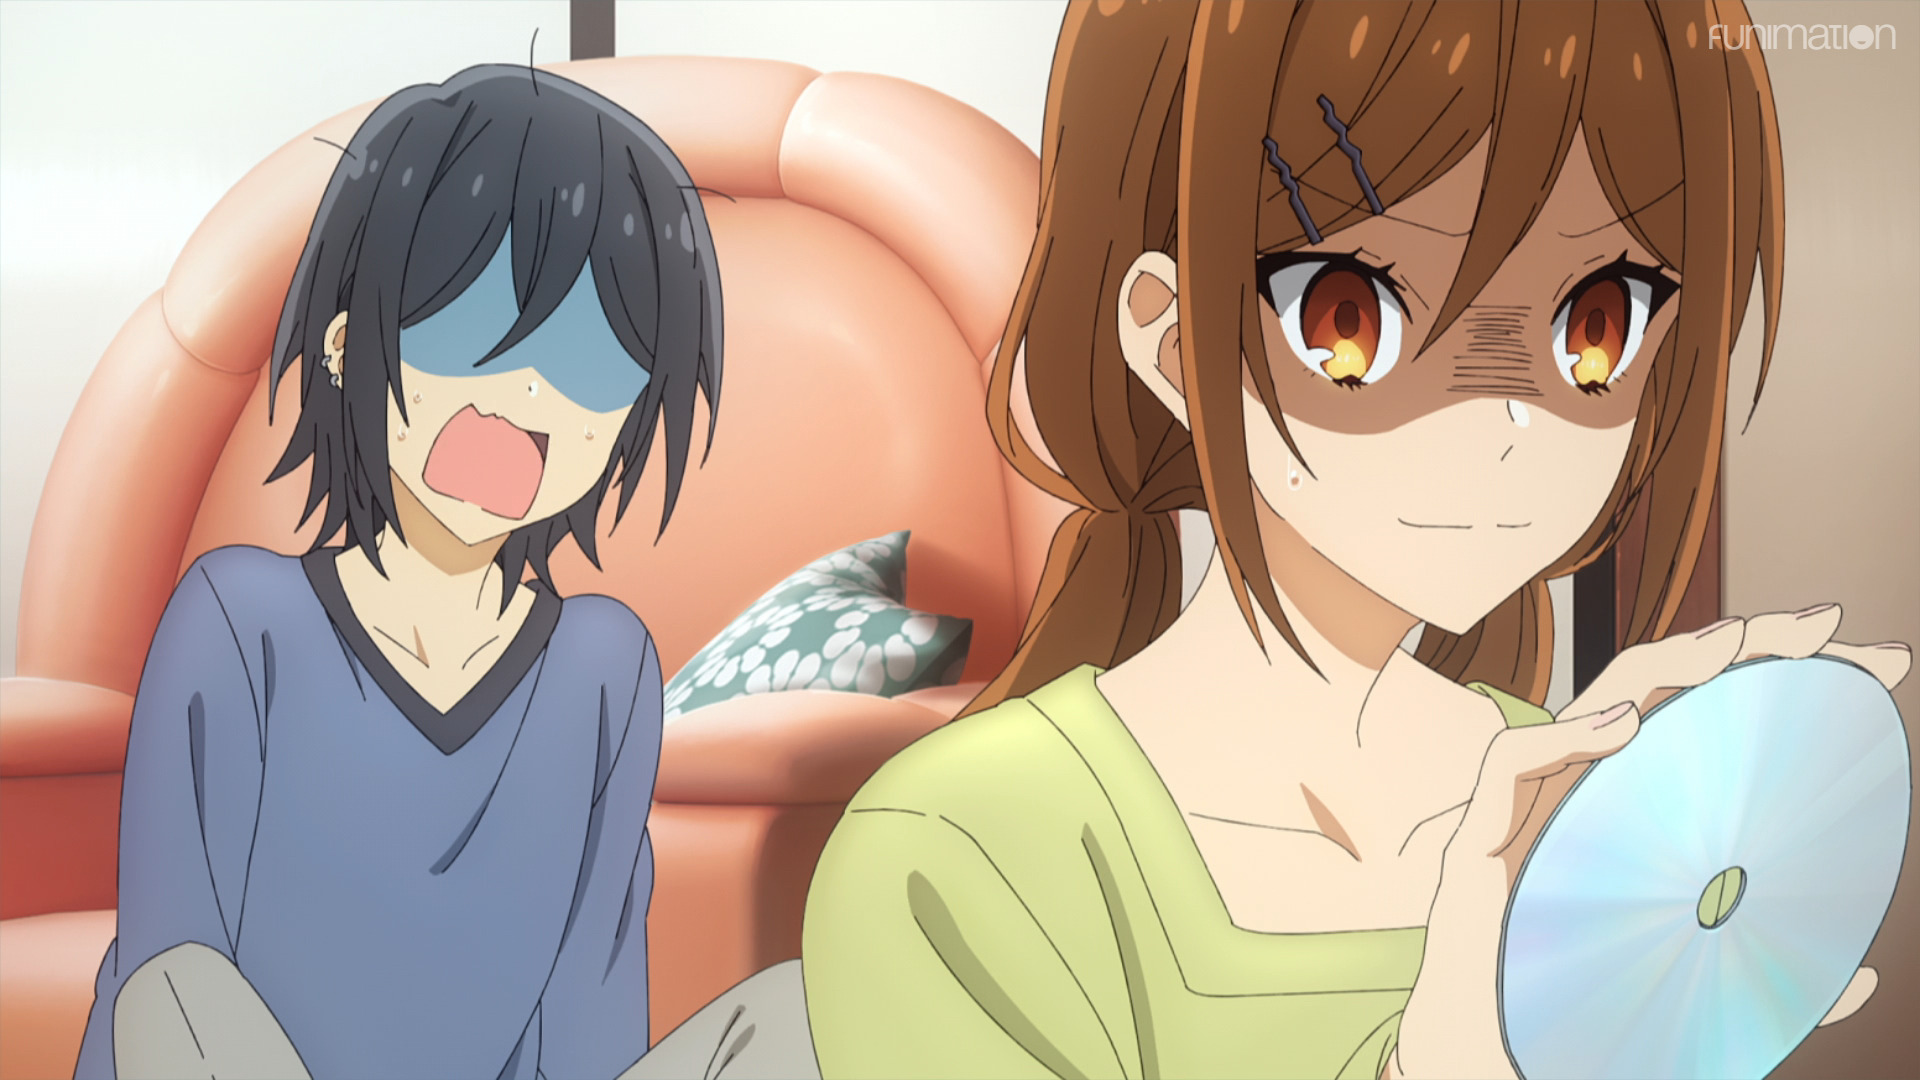 Horimiya Episode 3 Shows Sweet Romantic Progress - Anime Corner